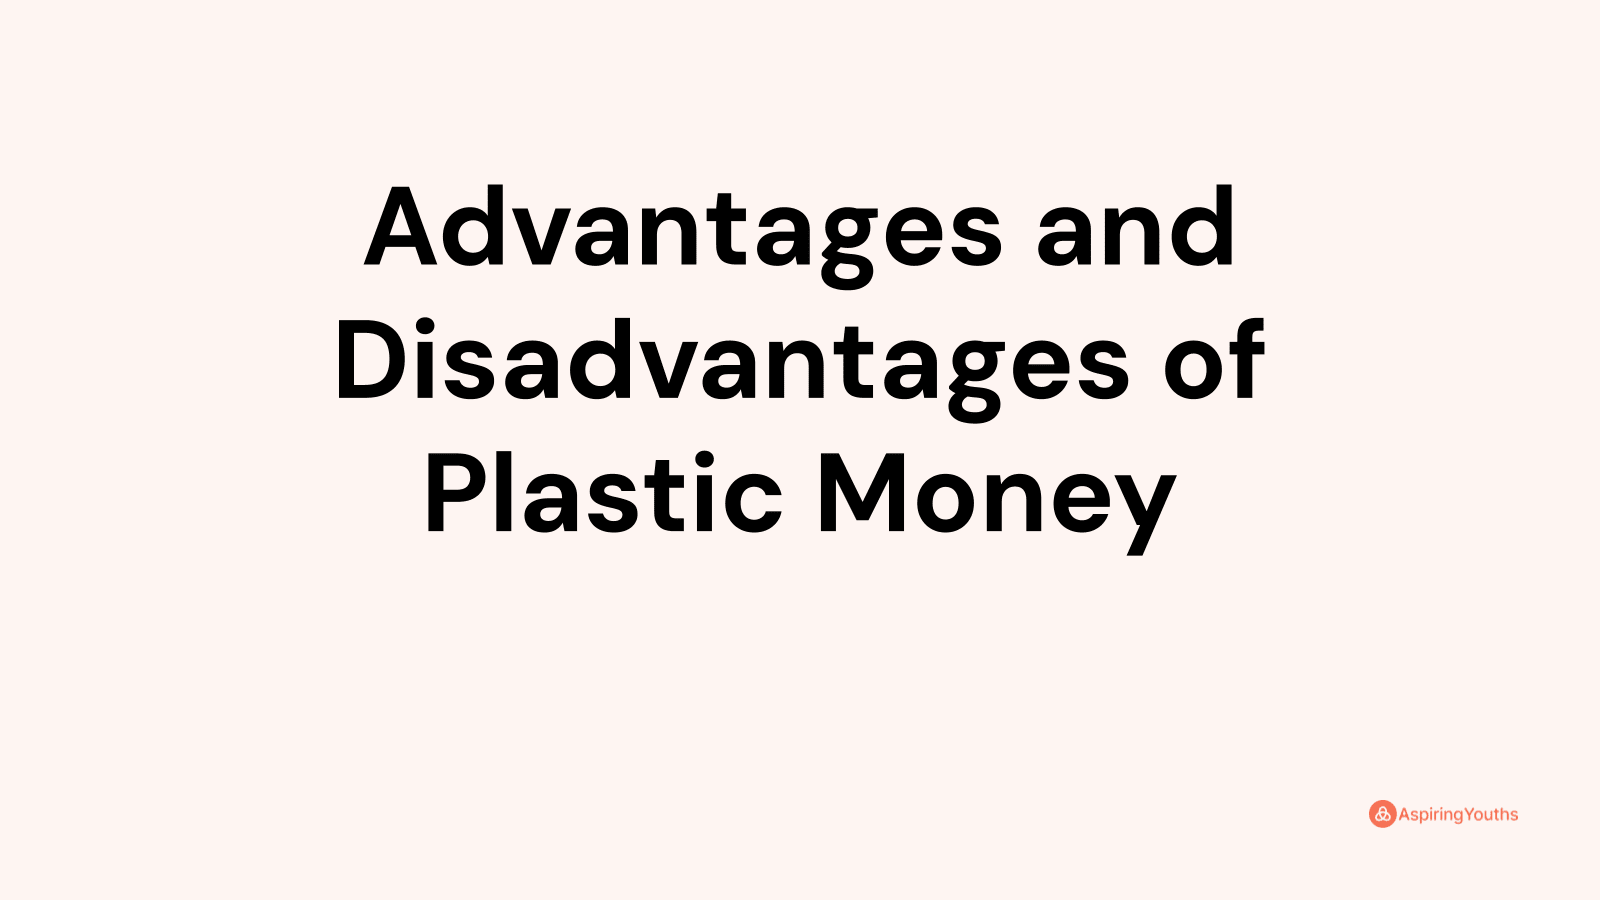 Advantages and disadvantages of Plastic Money